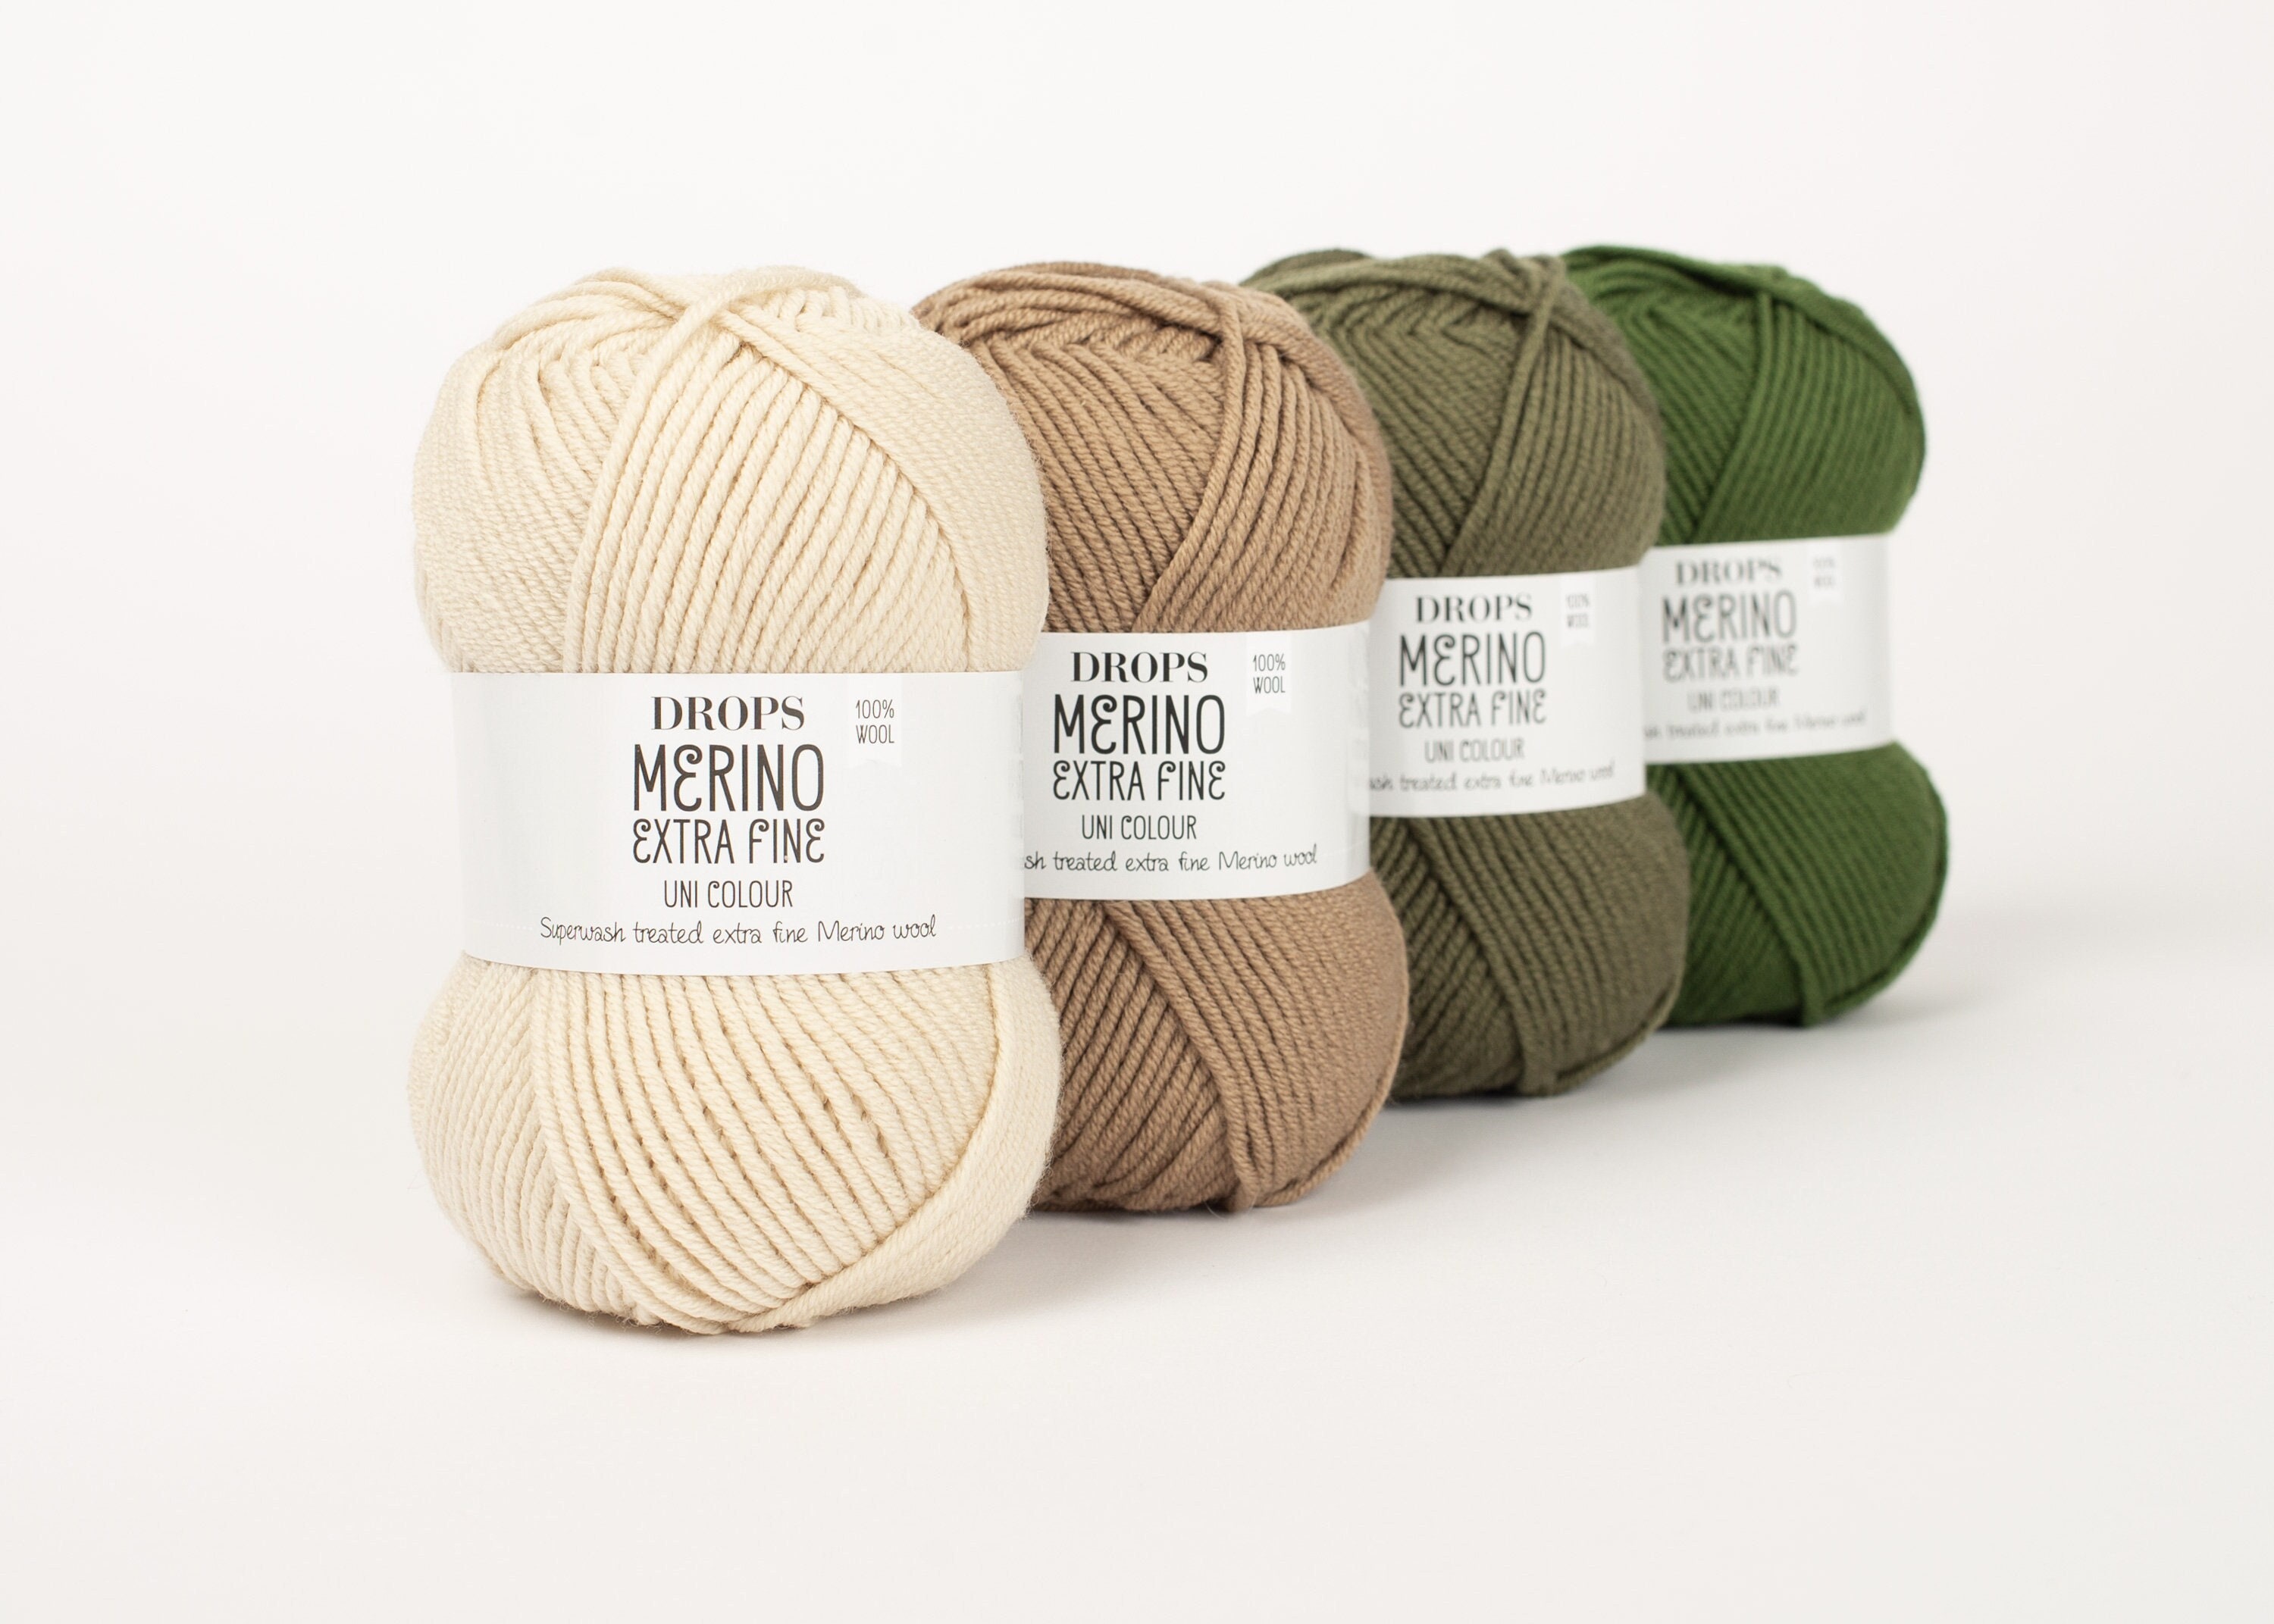 DROPS Sky Knitting Yarn Super Soft and Lightweight in Baby Alpaca and  Merino Wool Yarn Chunky Yarn 